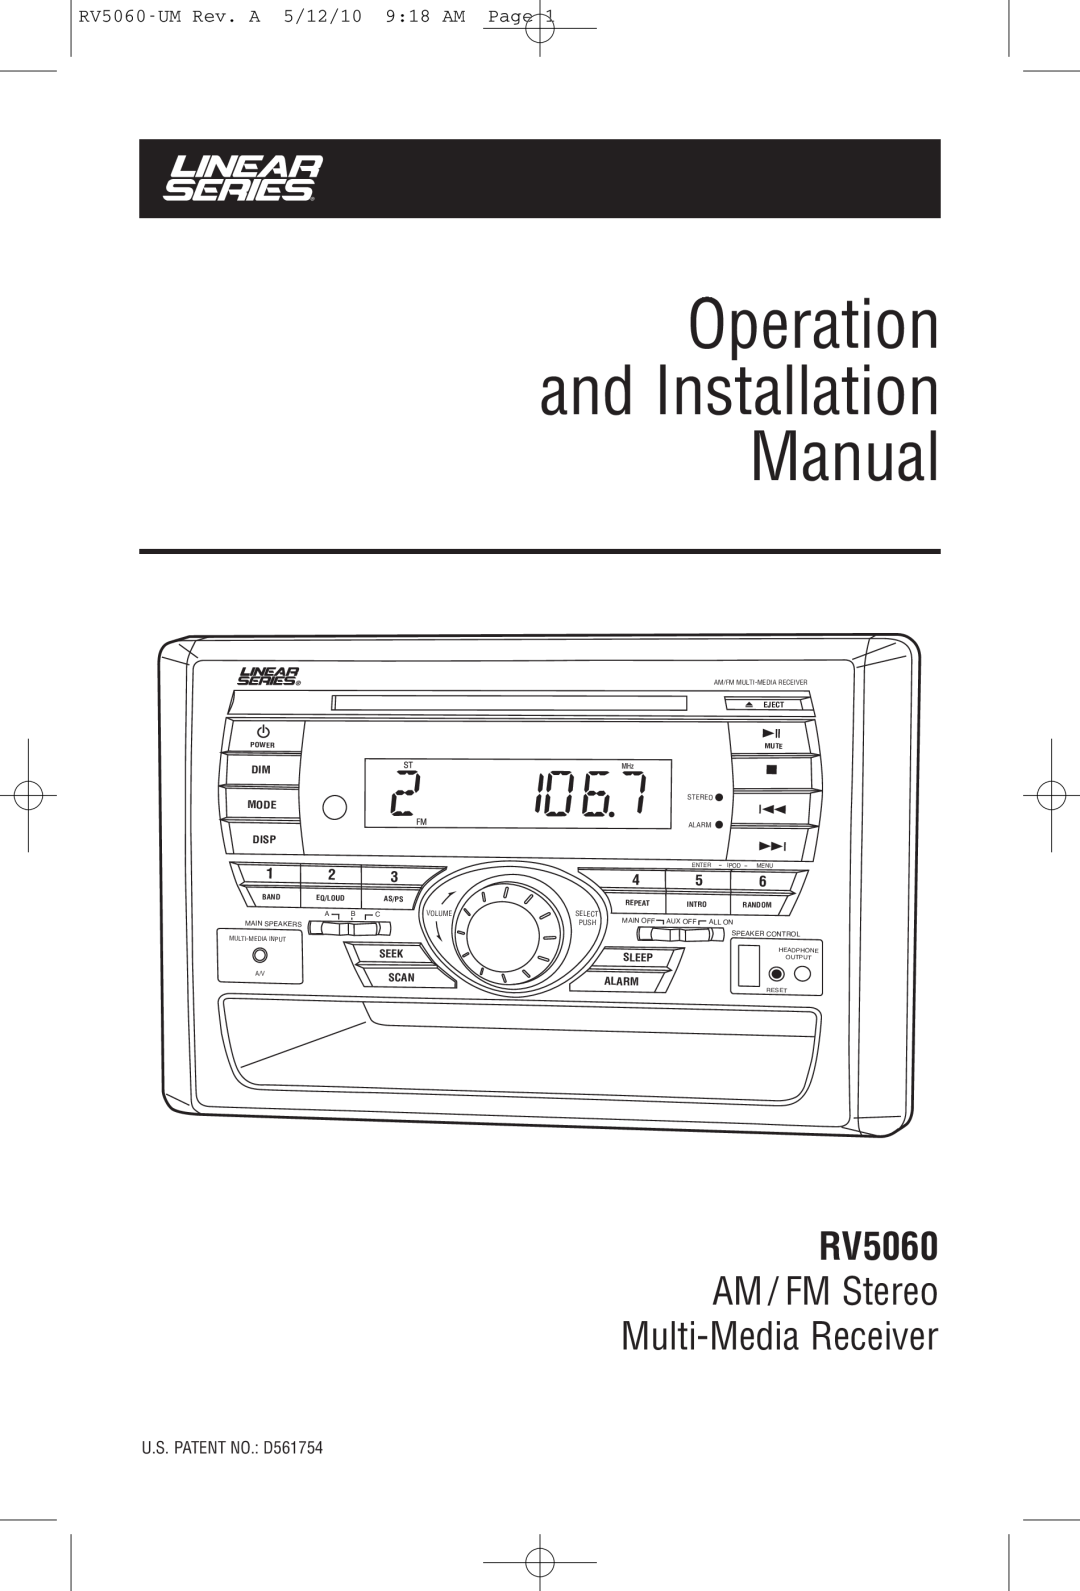 Linear installation manual RV5060-UMRev. A 5/12/10 9 18 AM Page, Operation and Installation Manual, Disp, Seek, Scan 